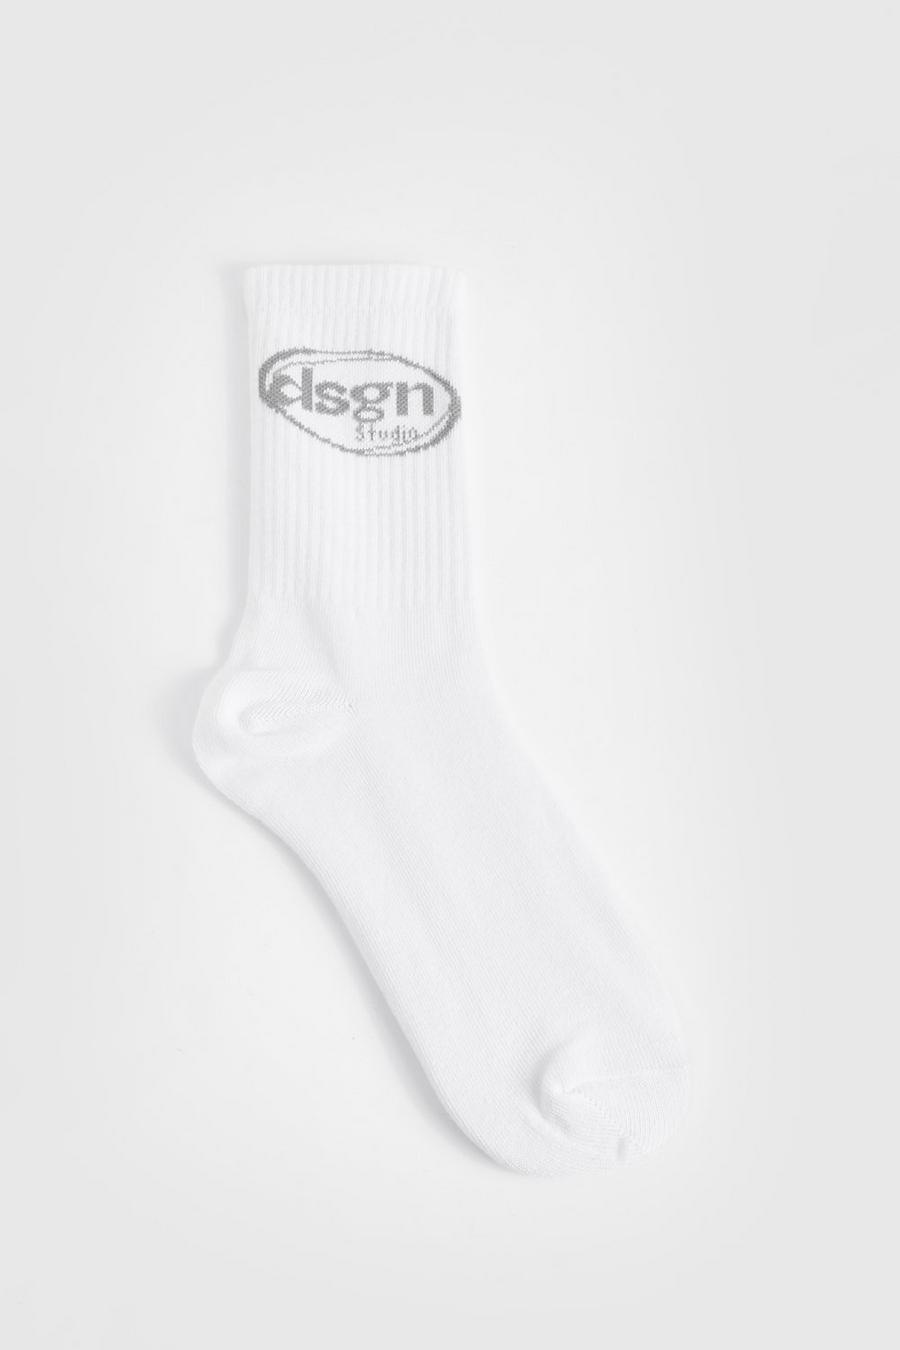 Calcetines deportivos con eslogan Dsgn Studio, White image number 1